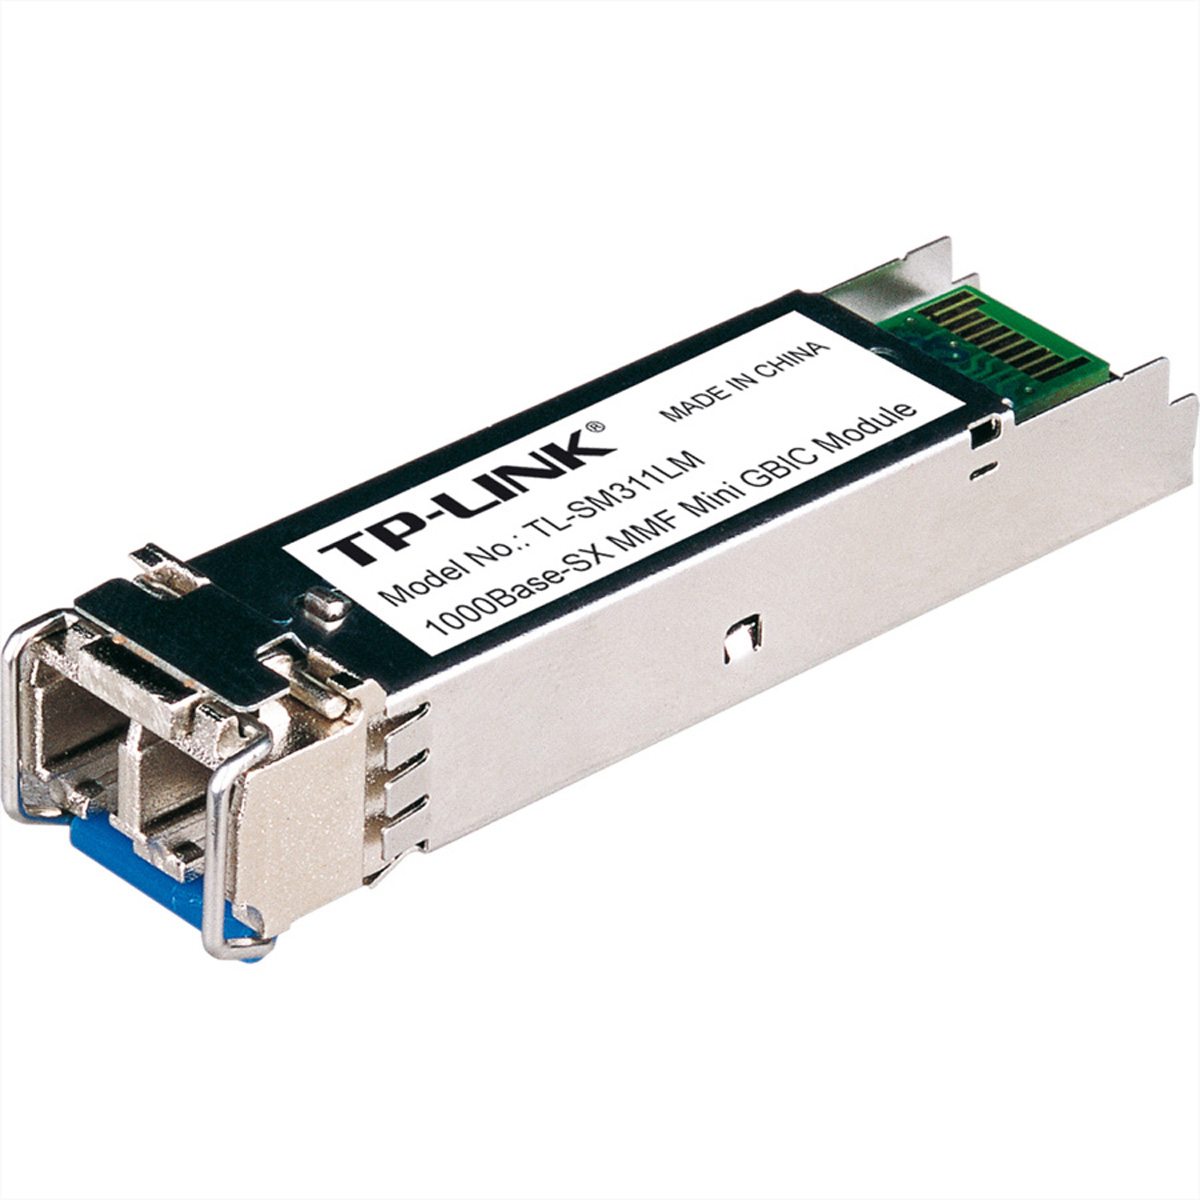 TP-LINK TL-SM311LS - SFP (Mini-GBIC)-Transceiver-Modul